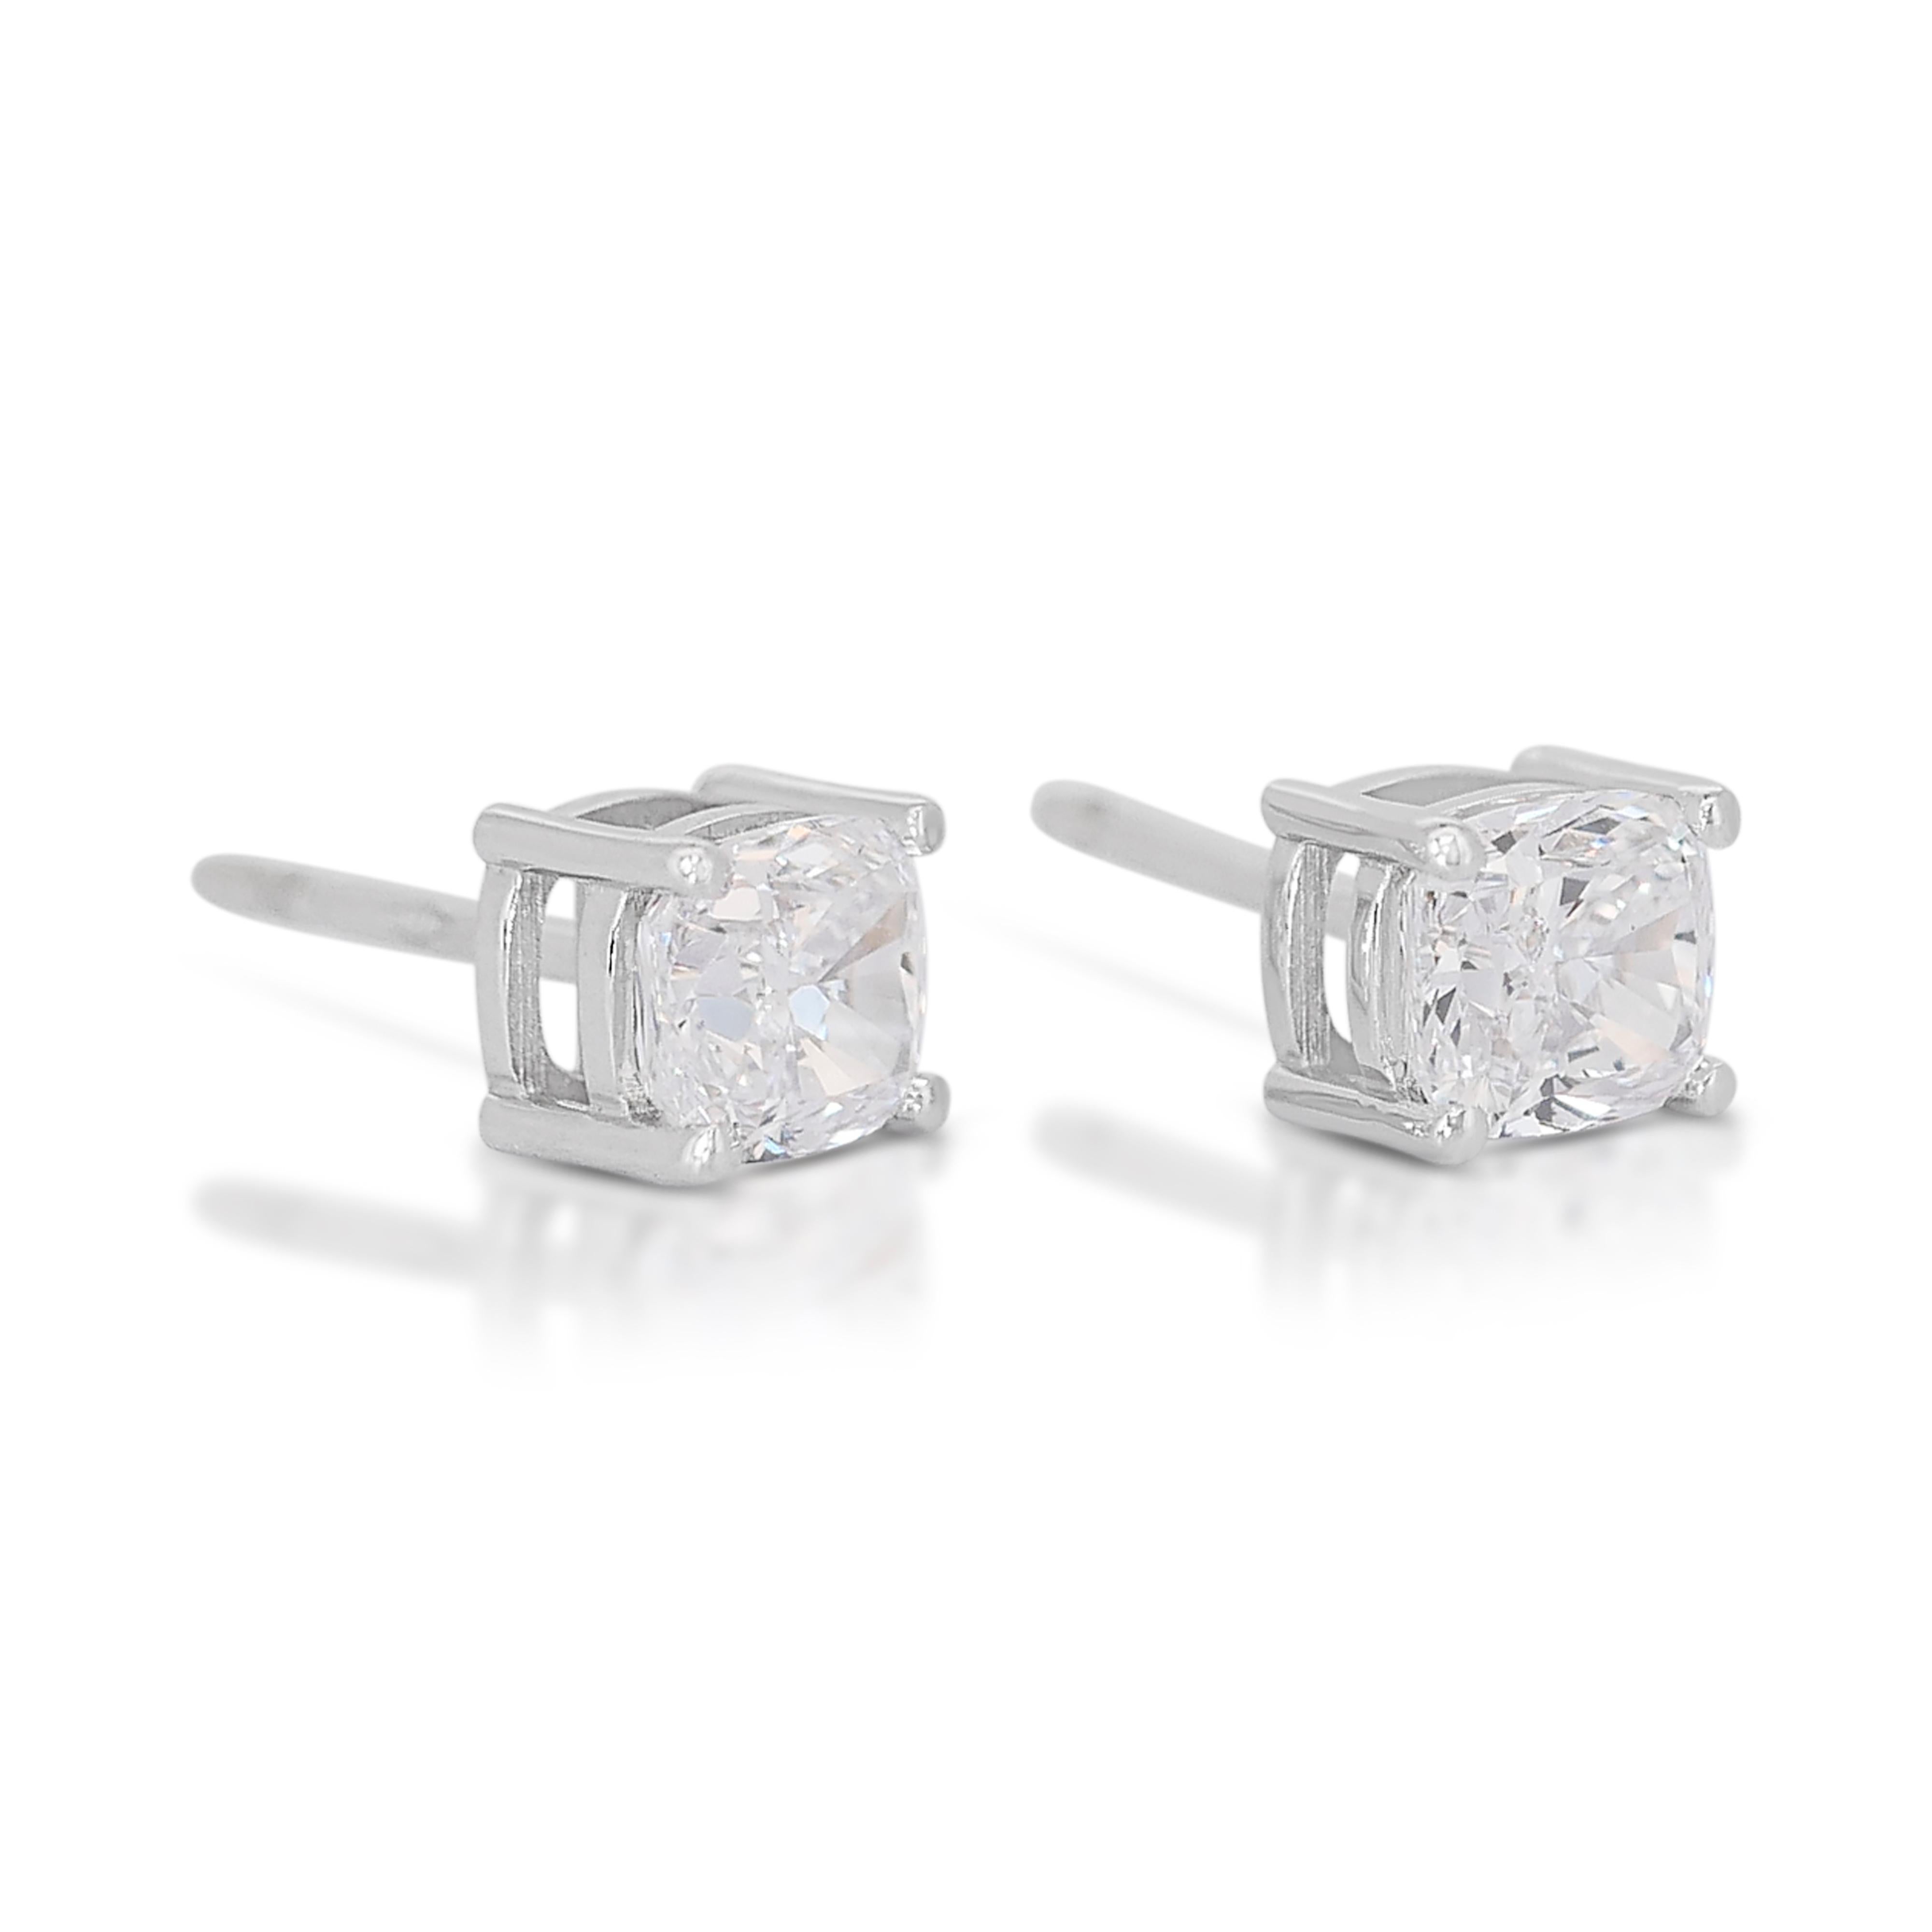 Women's Lustrous 1.60ct Diamonds Stud Earrings in 18k White Gold - GIA Certified For Sale